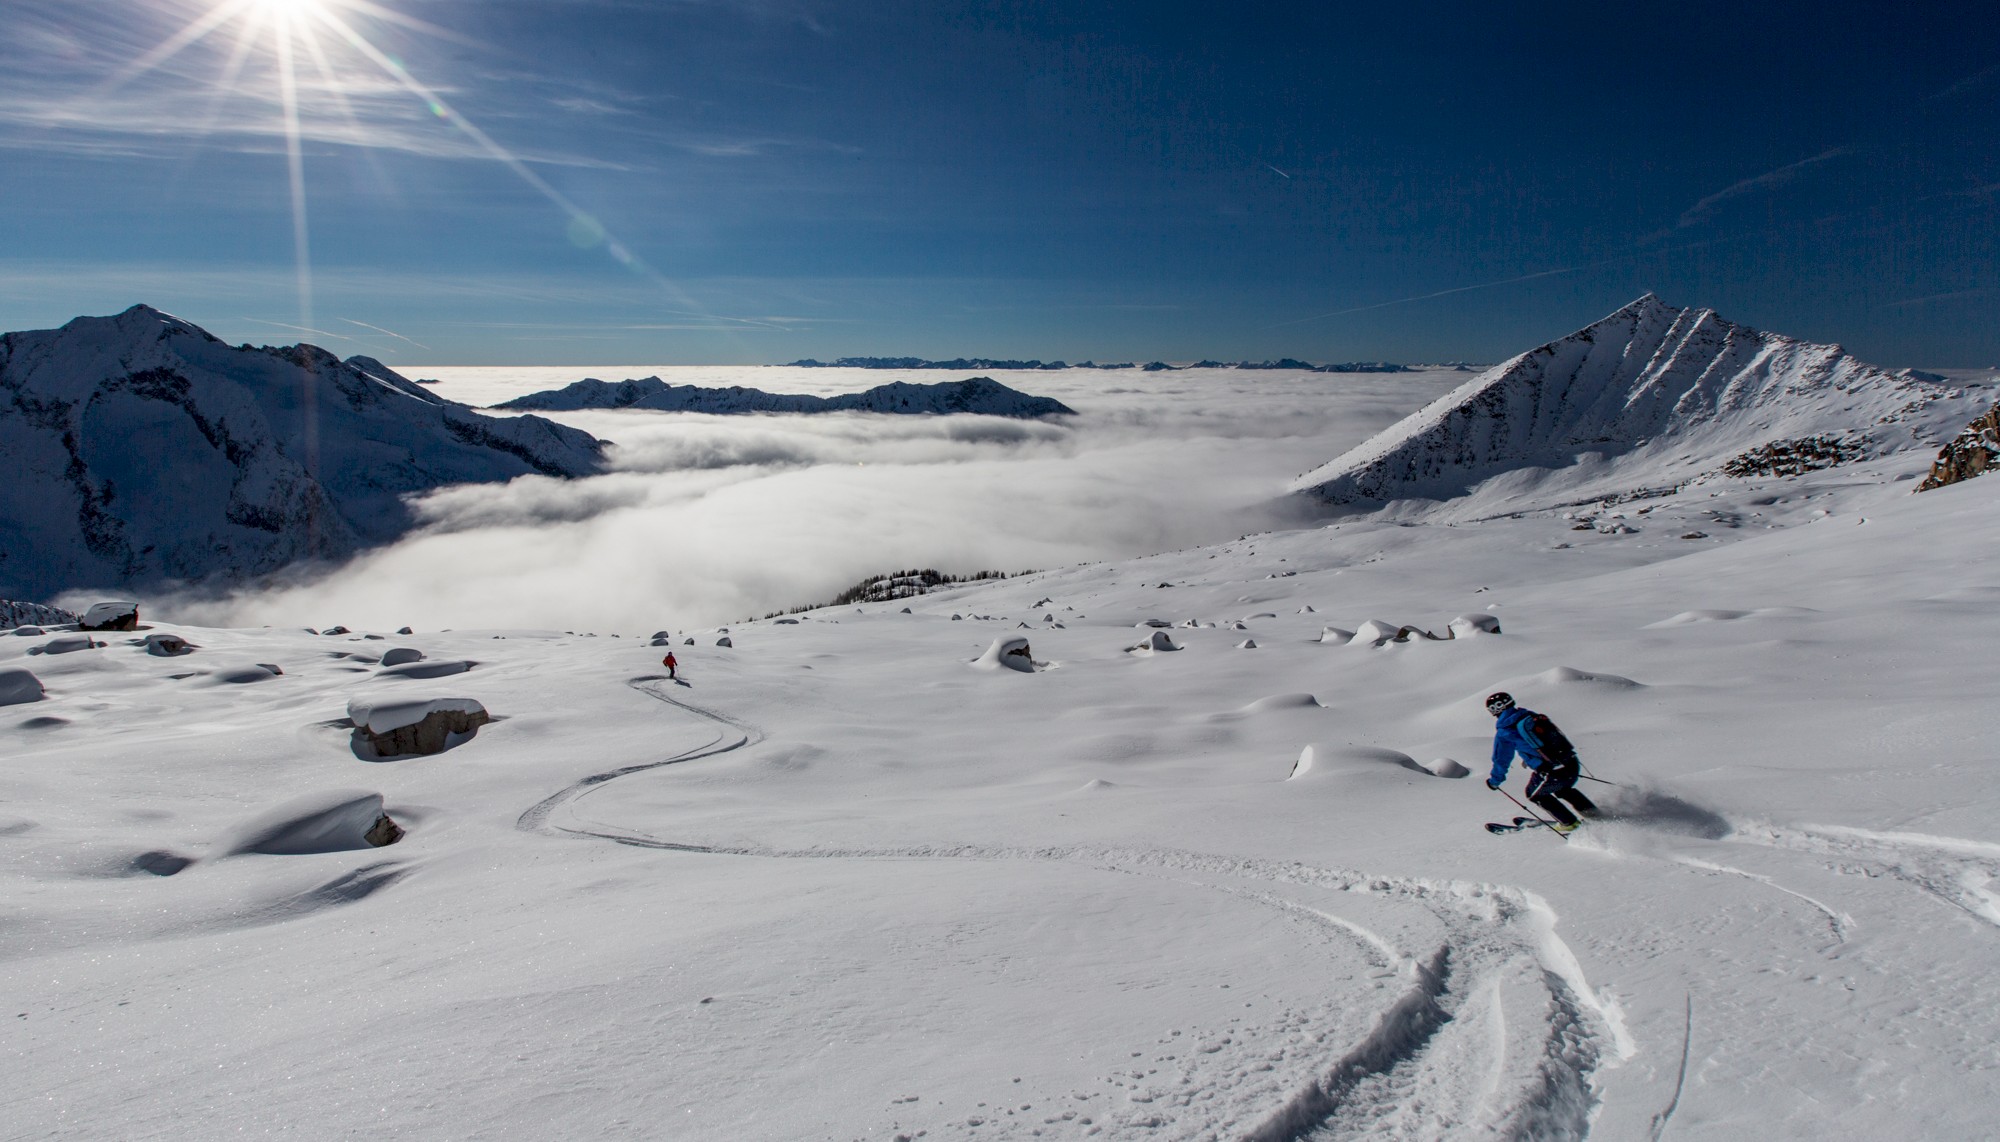 Open bowl alpine powder skiing at Stellar Heliskiing.